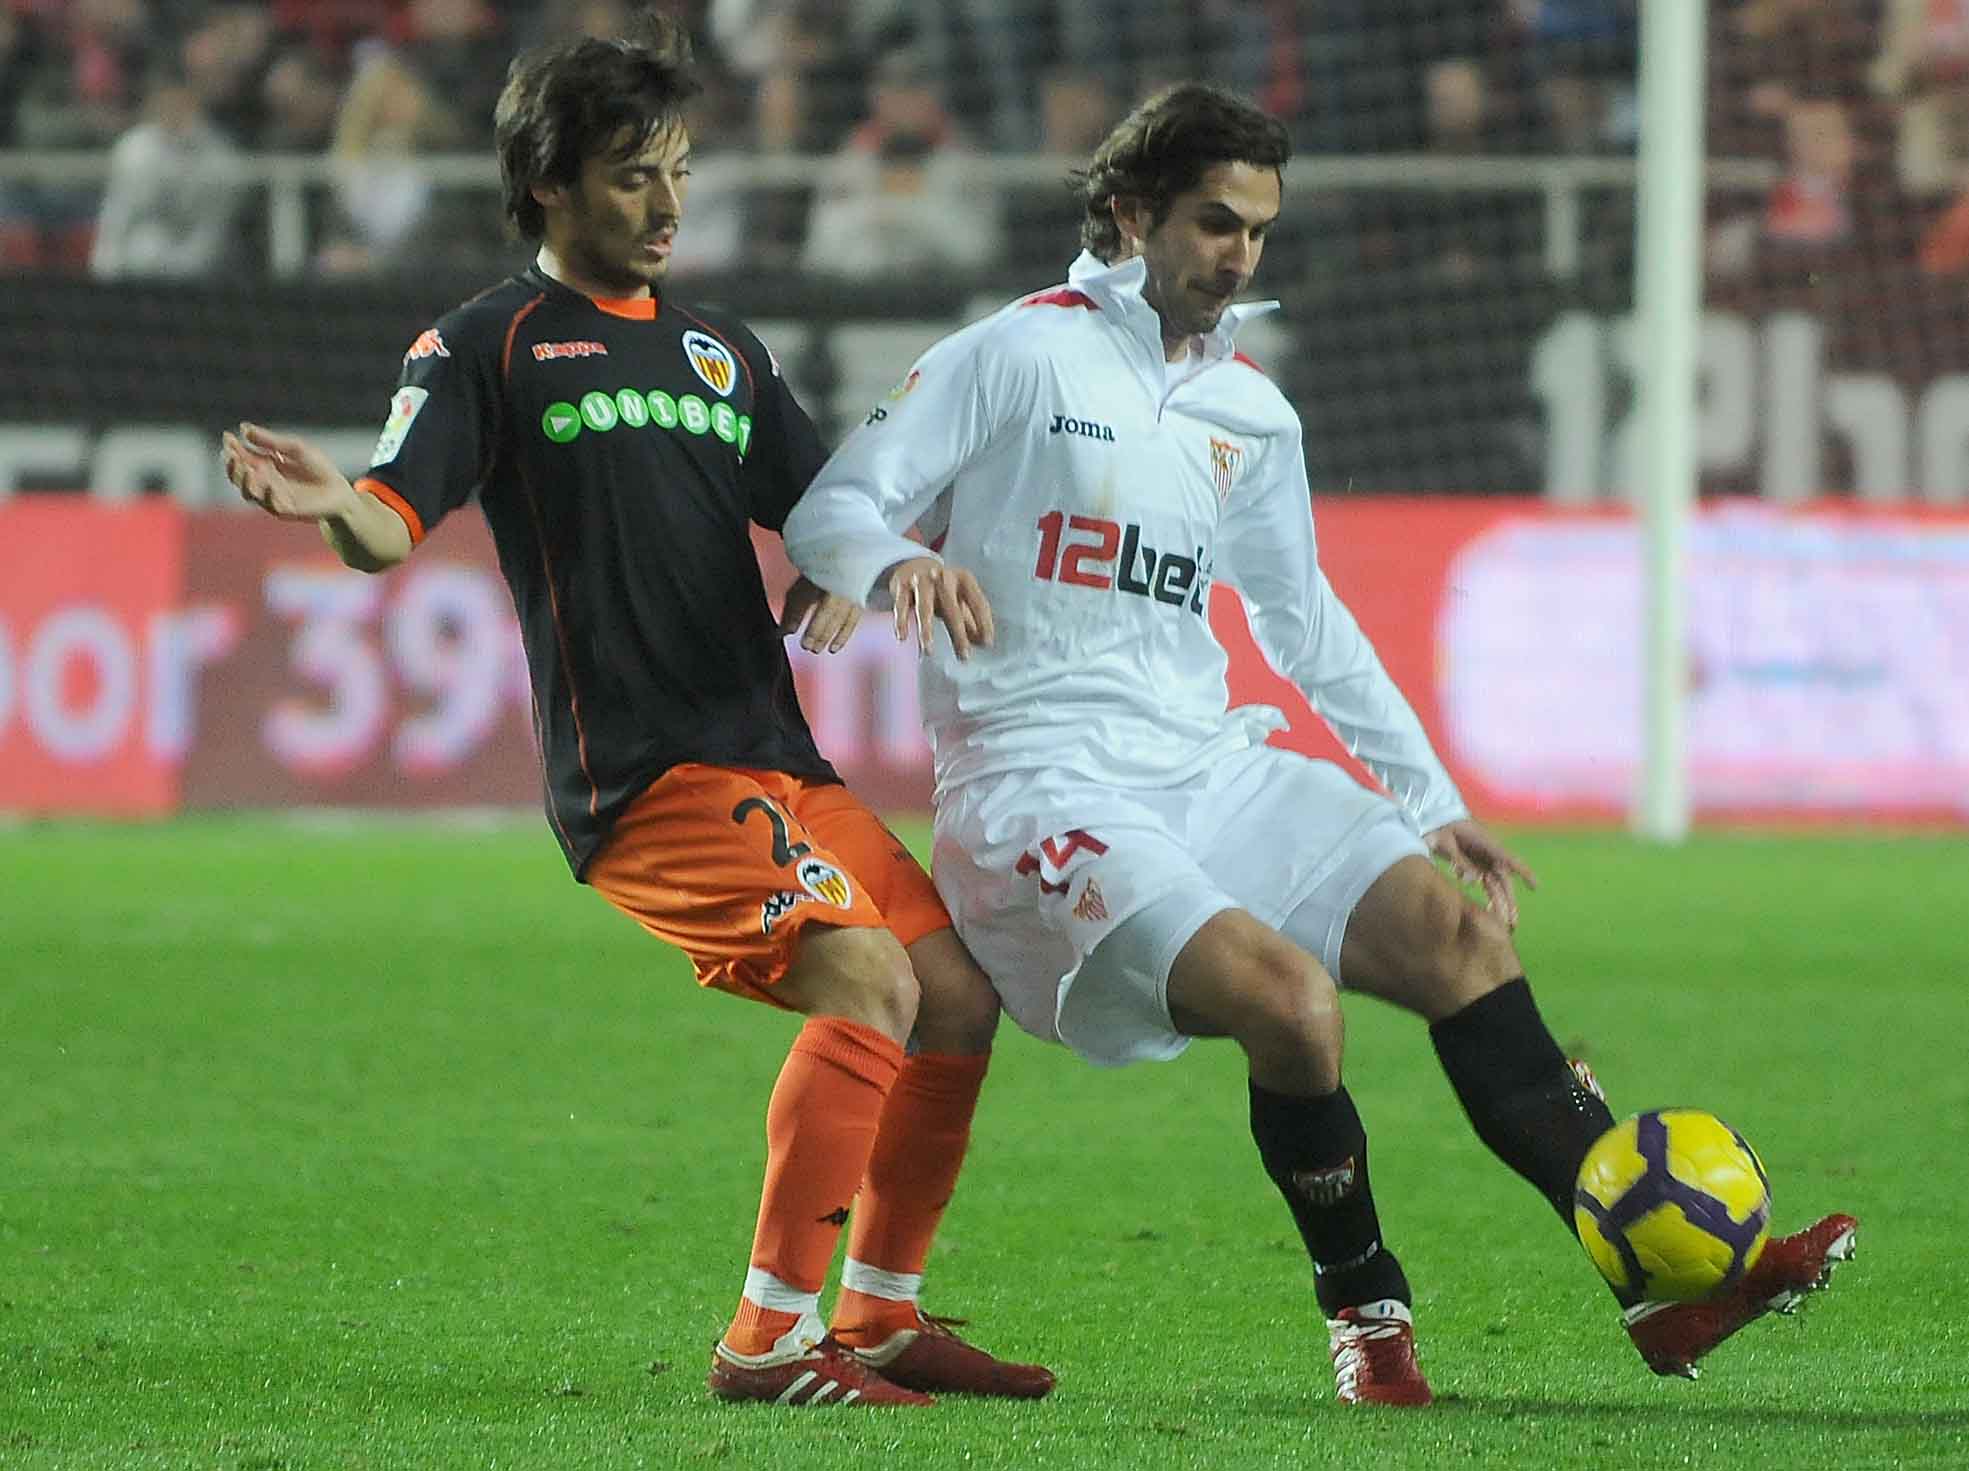 Escudé in action for Sevilla FC